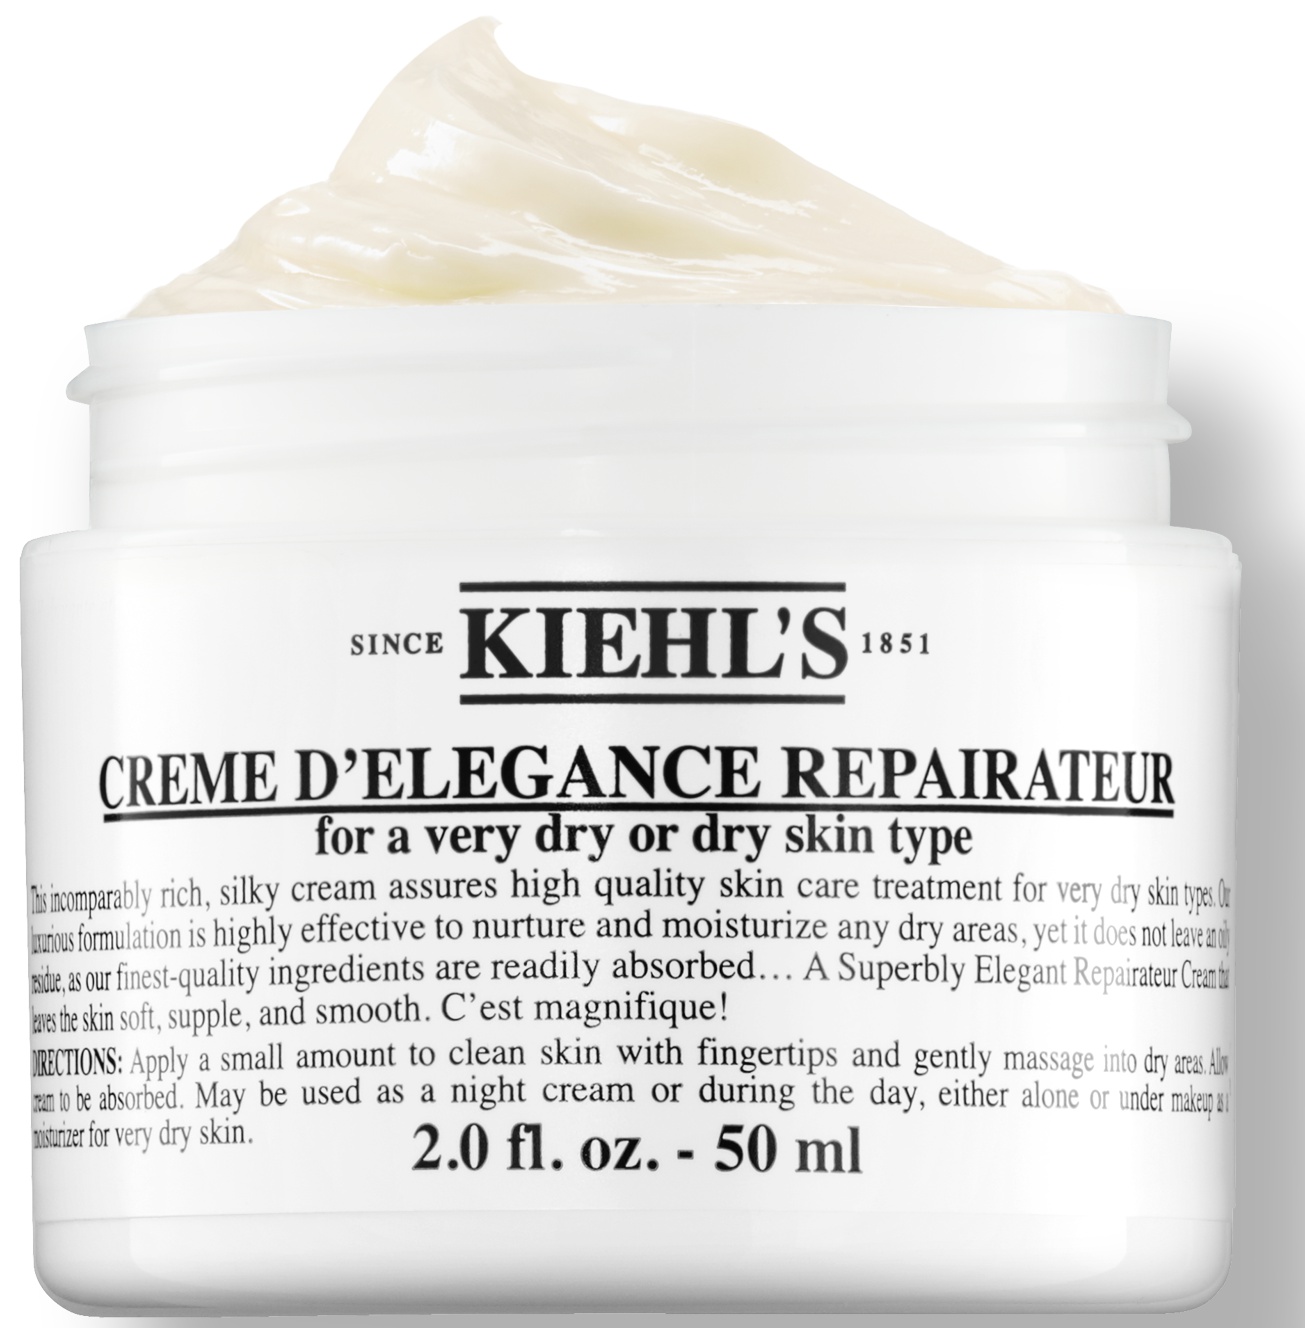 Kiehl’s Creme D'elegance Repairateur – Face Cream For Dry Skin